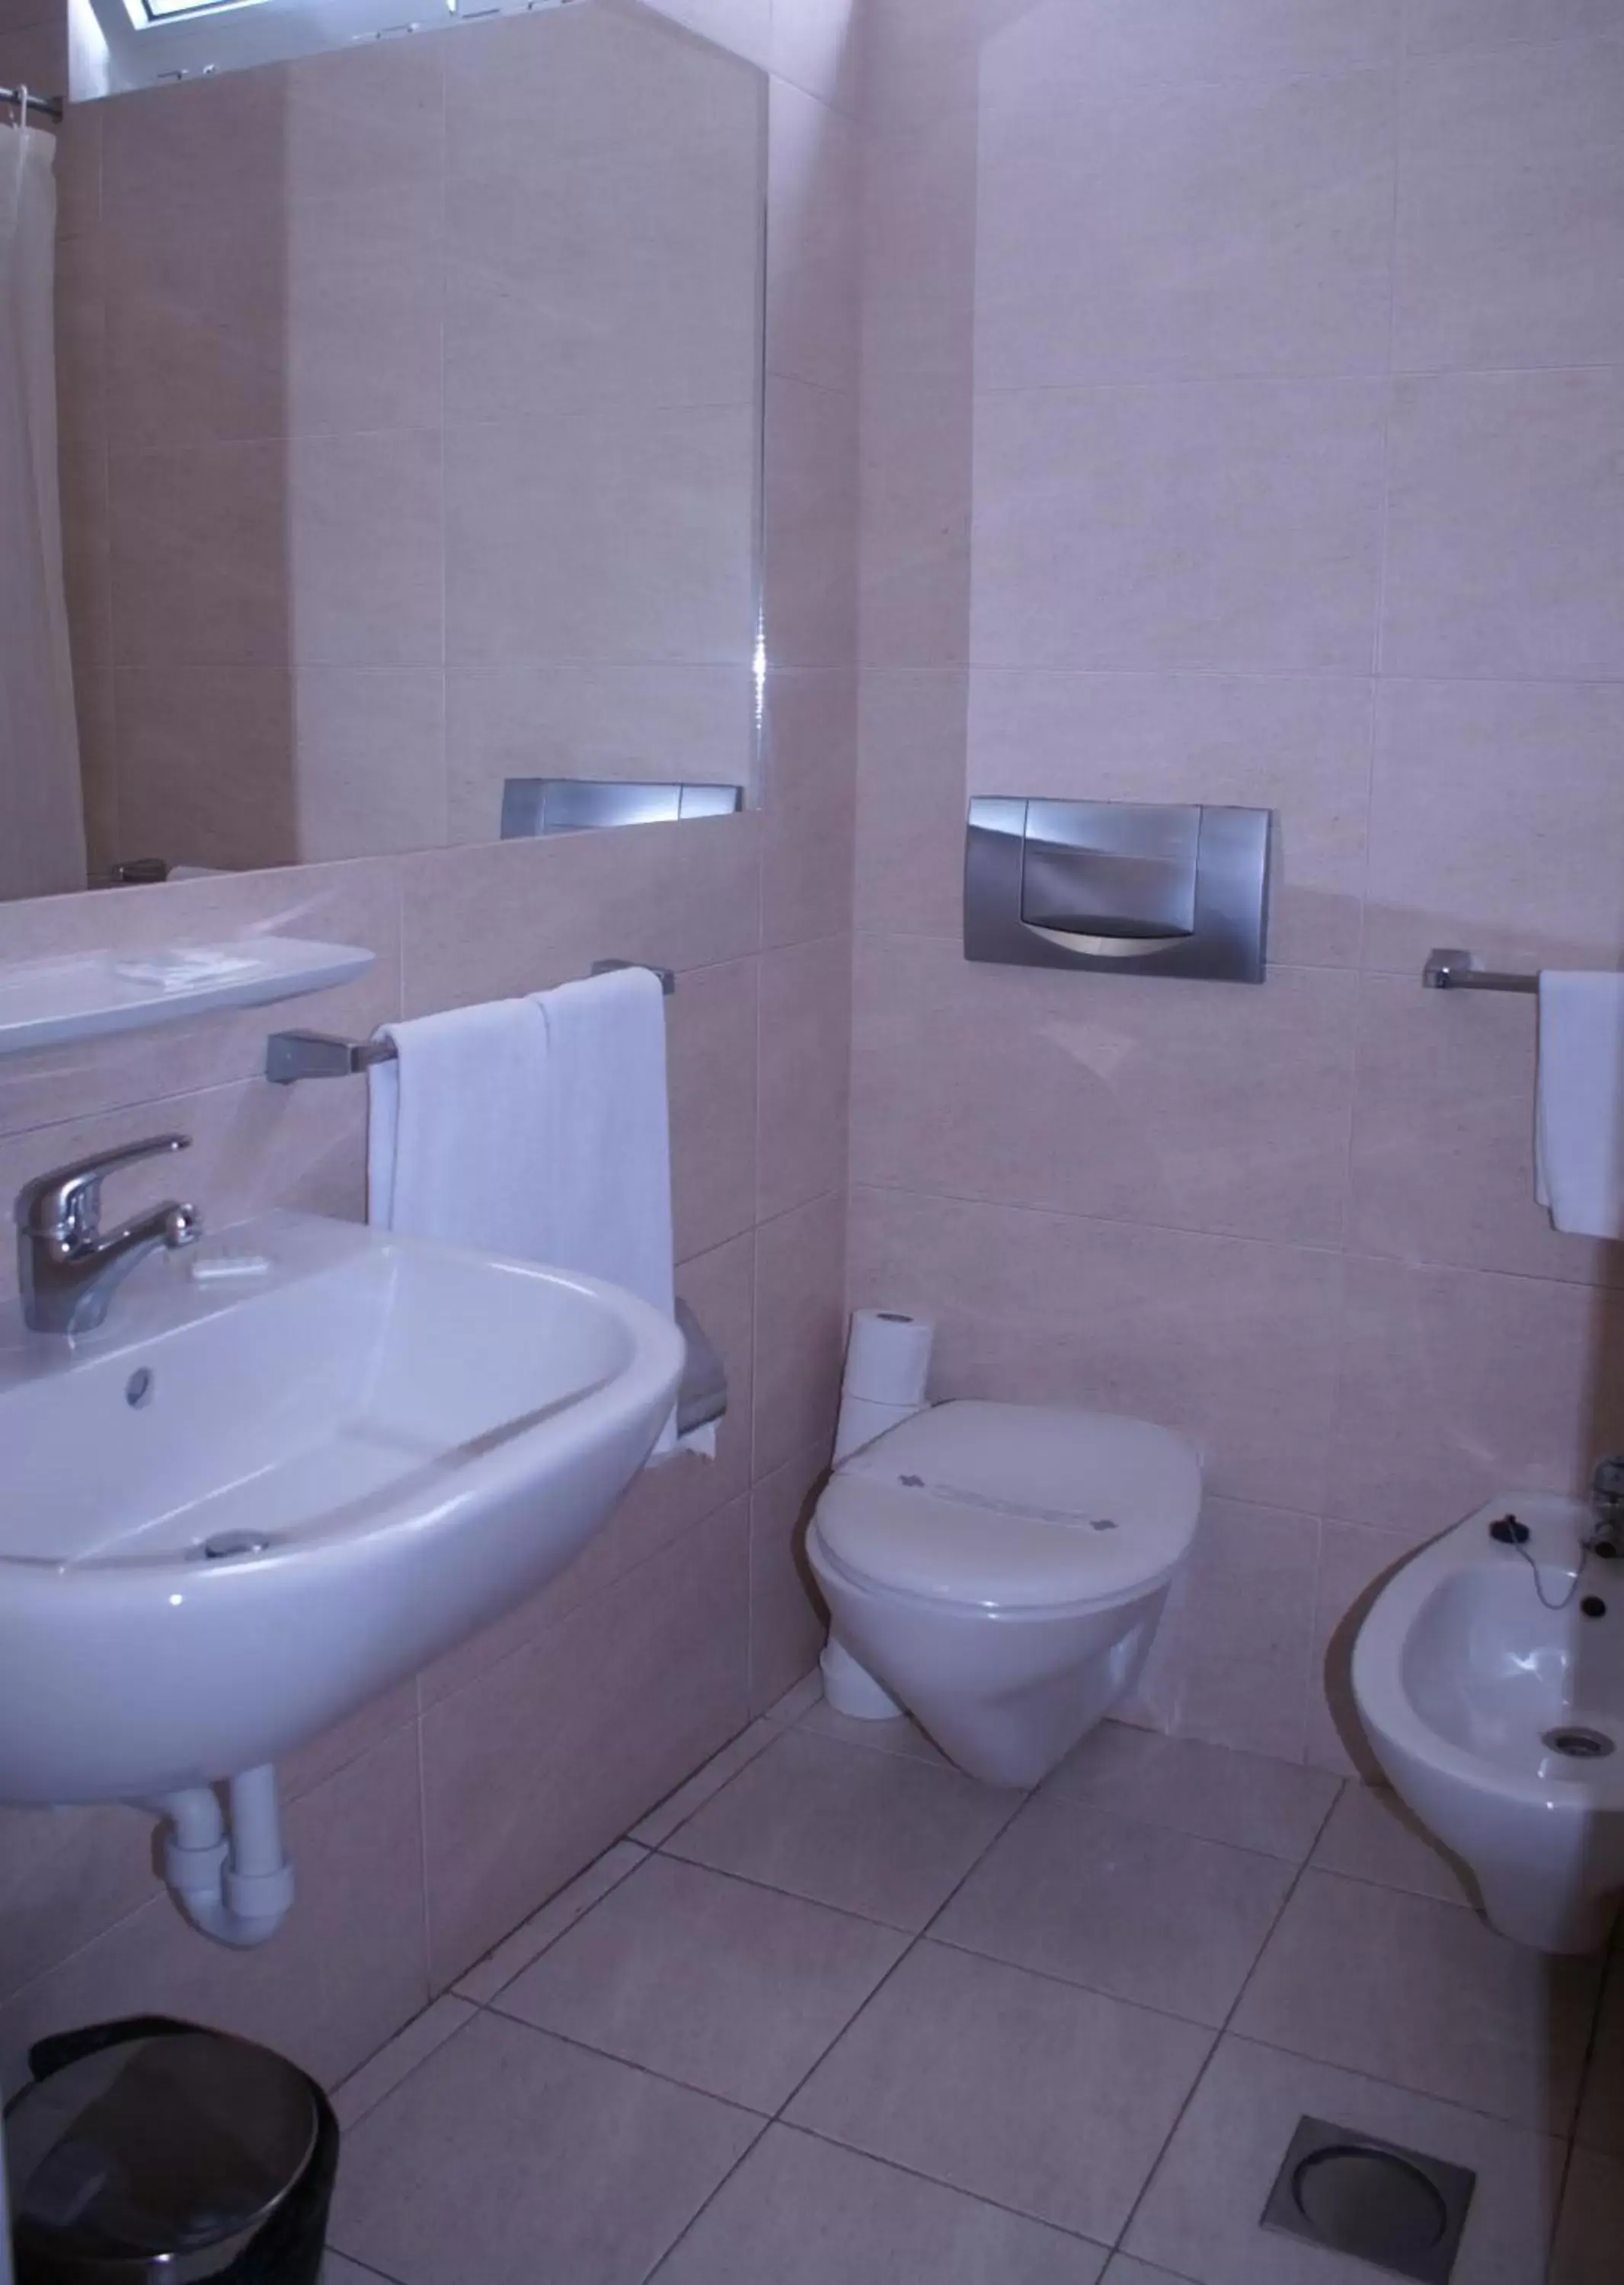 Bathroom in Hotel do Carmo